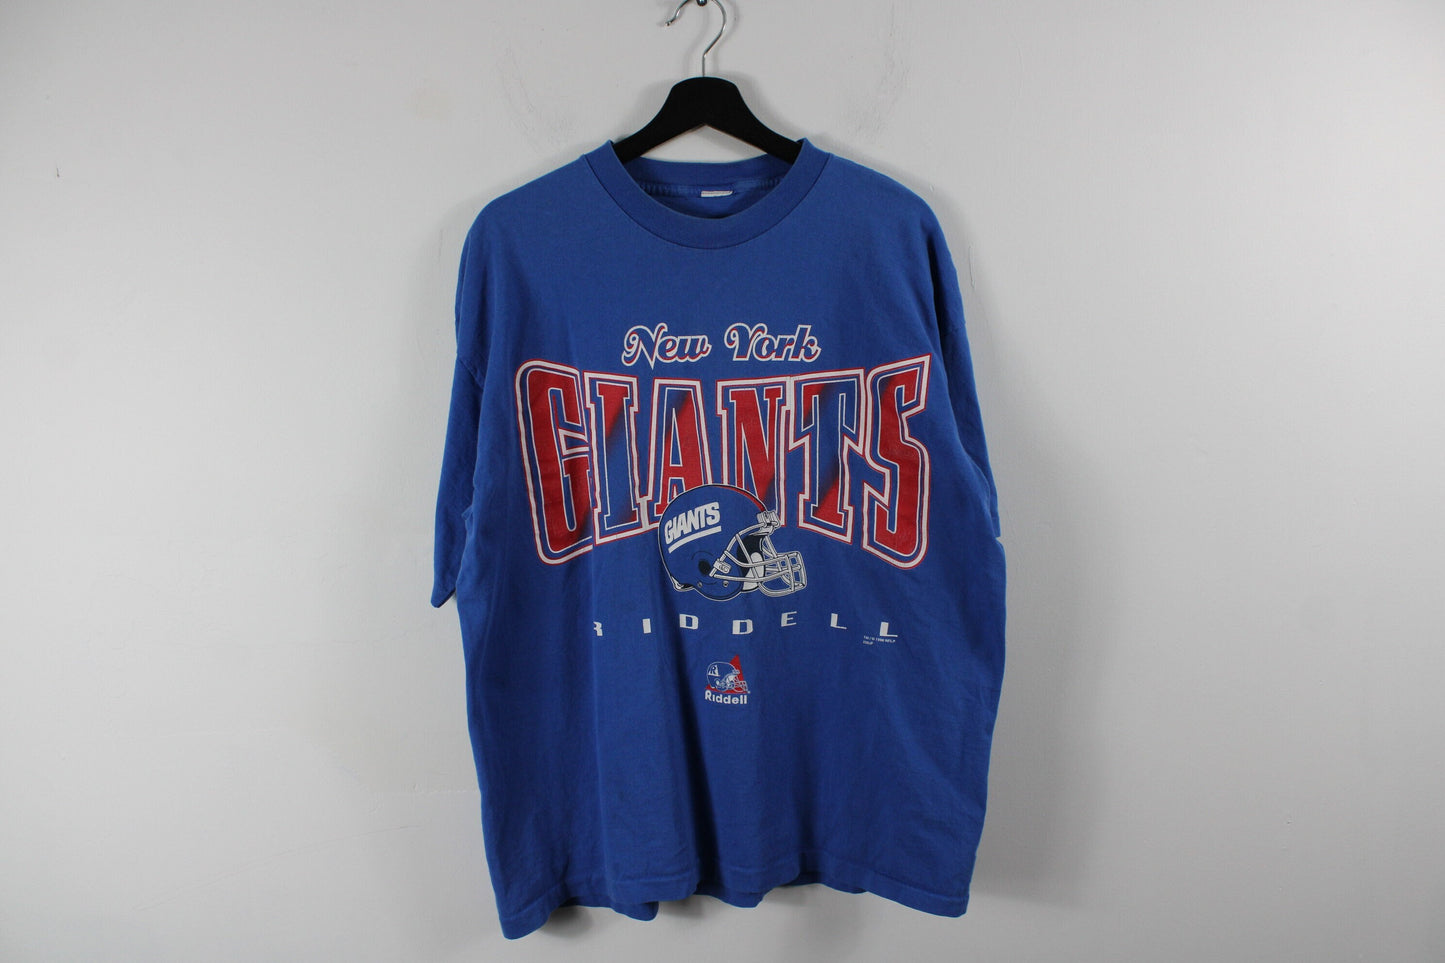 New-York Giants T-Shirt / Vintage NFL Football True-Fan Tee / 90s Sports Team Uniform Top